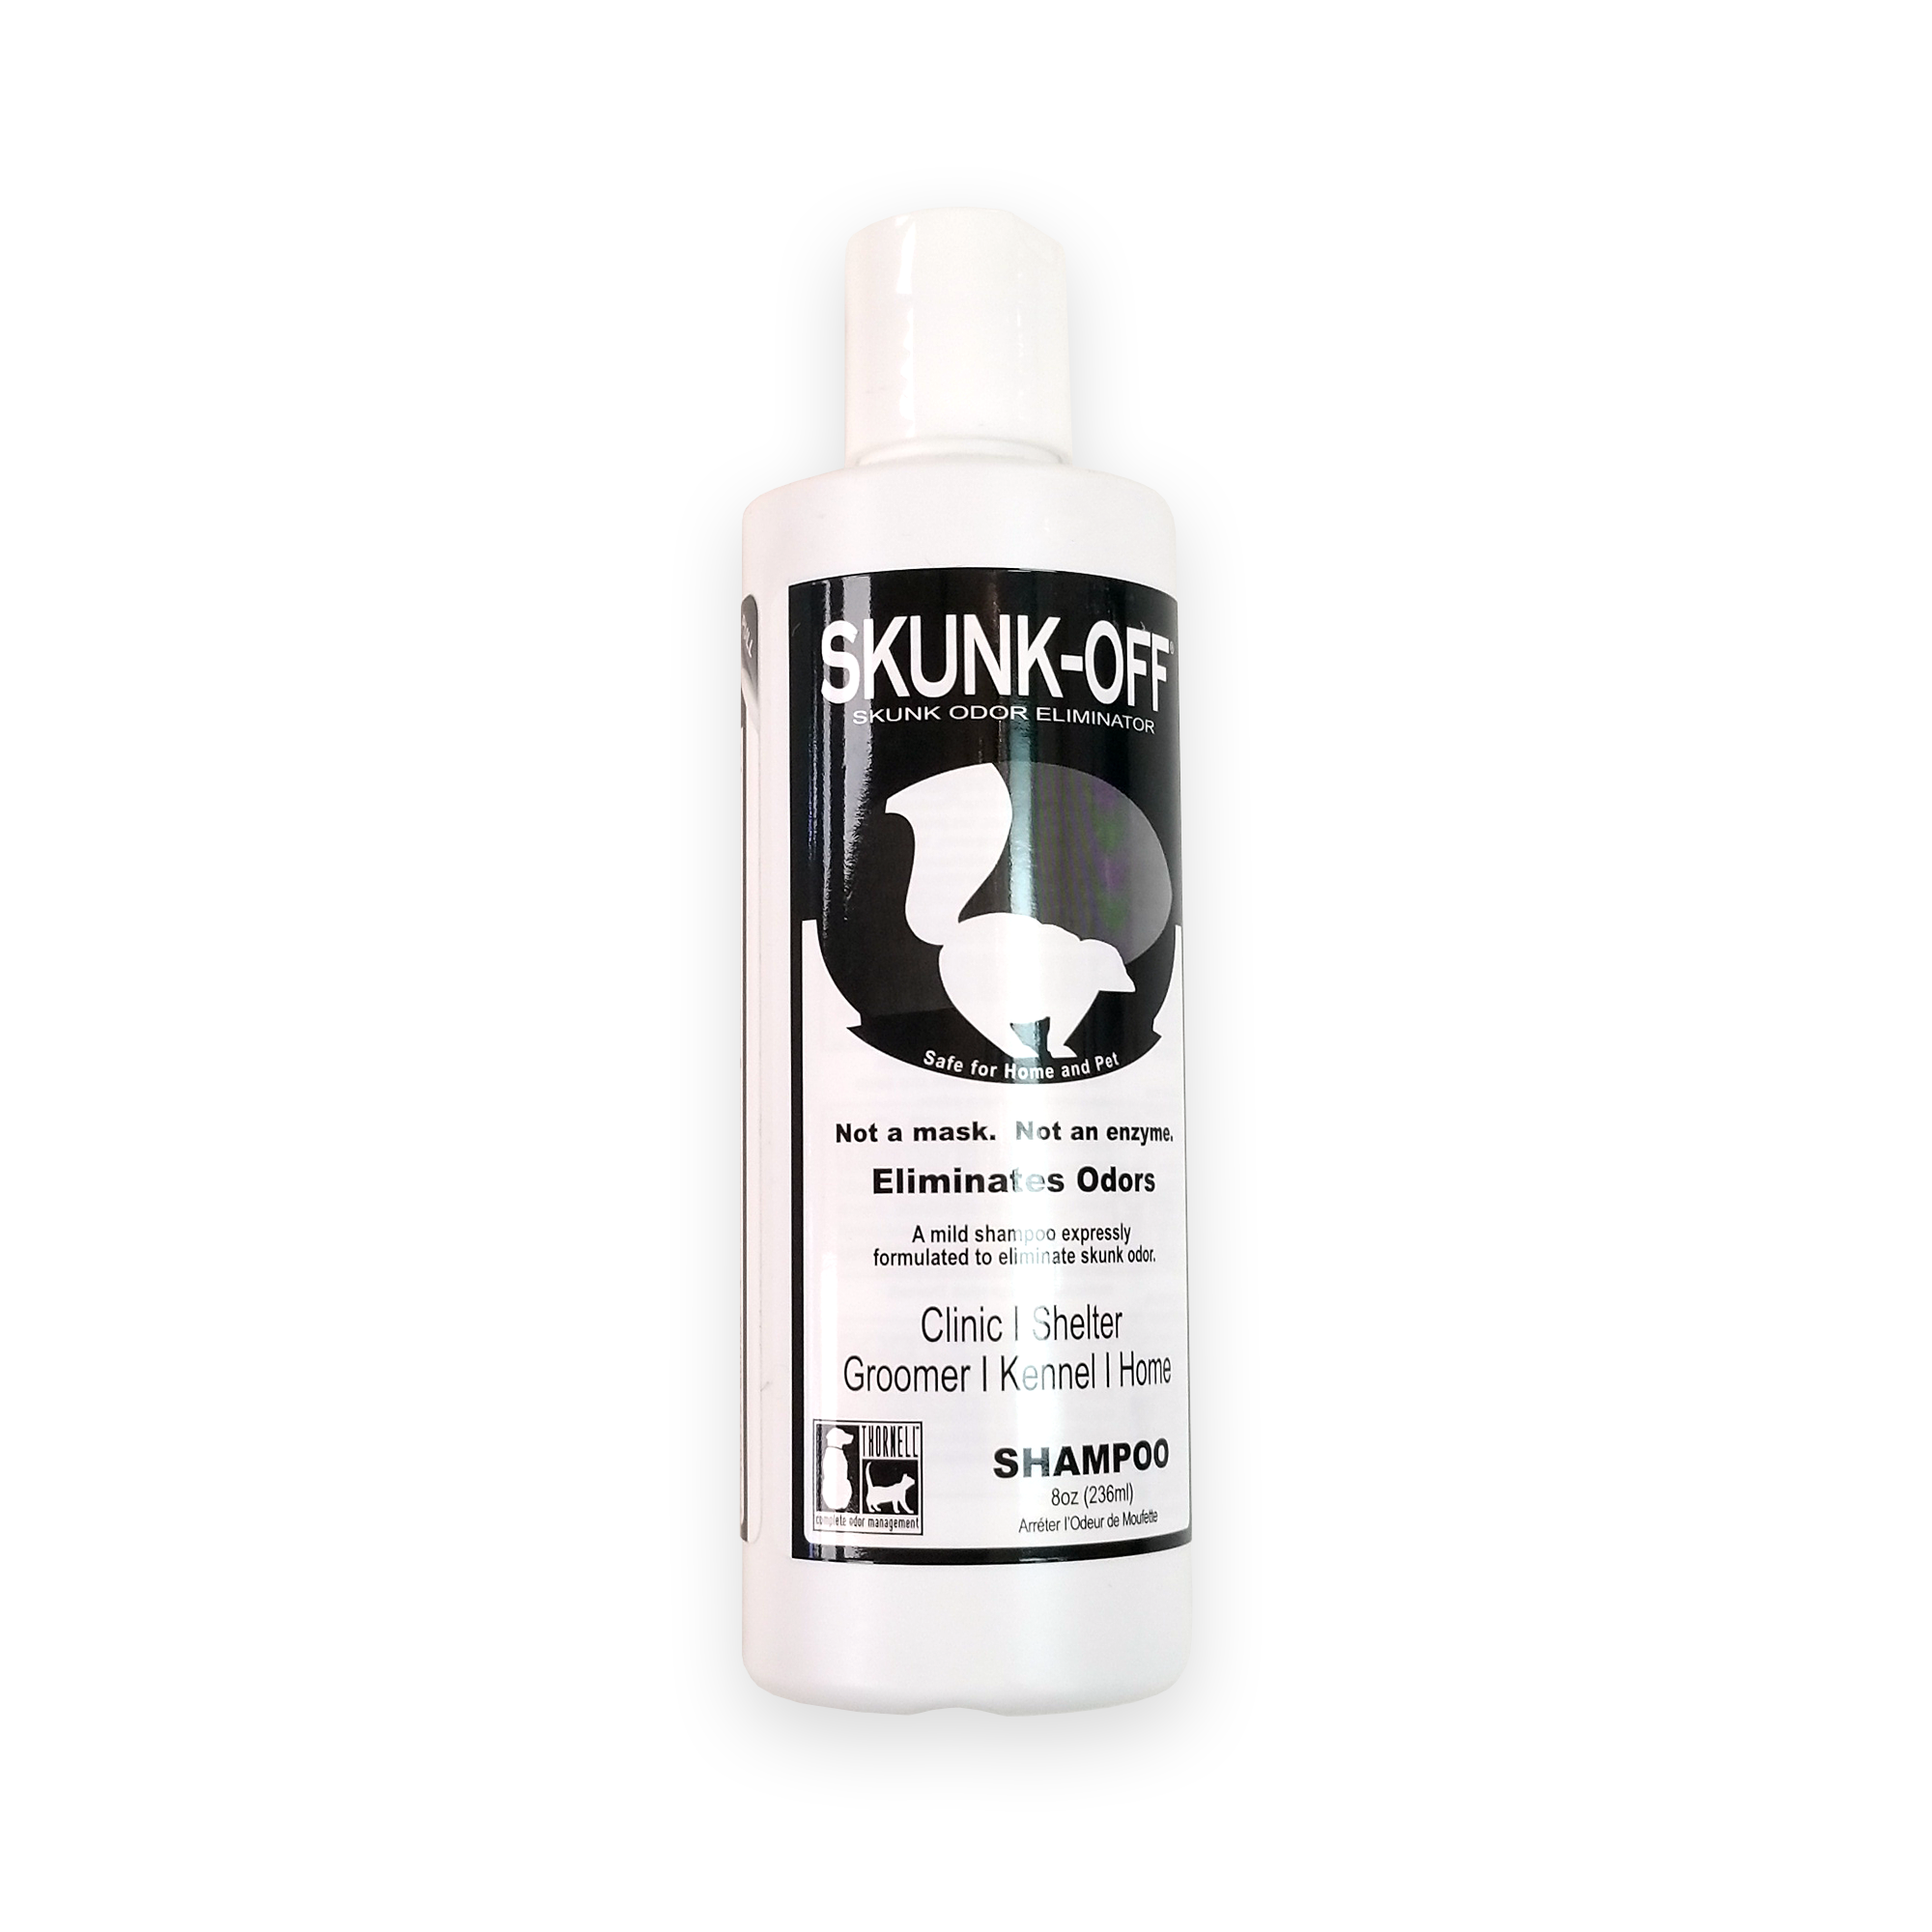 Skunk-Off Shampoo Eliminates Odors (236ml)